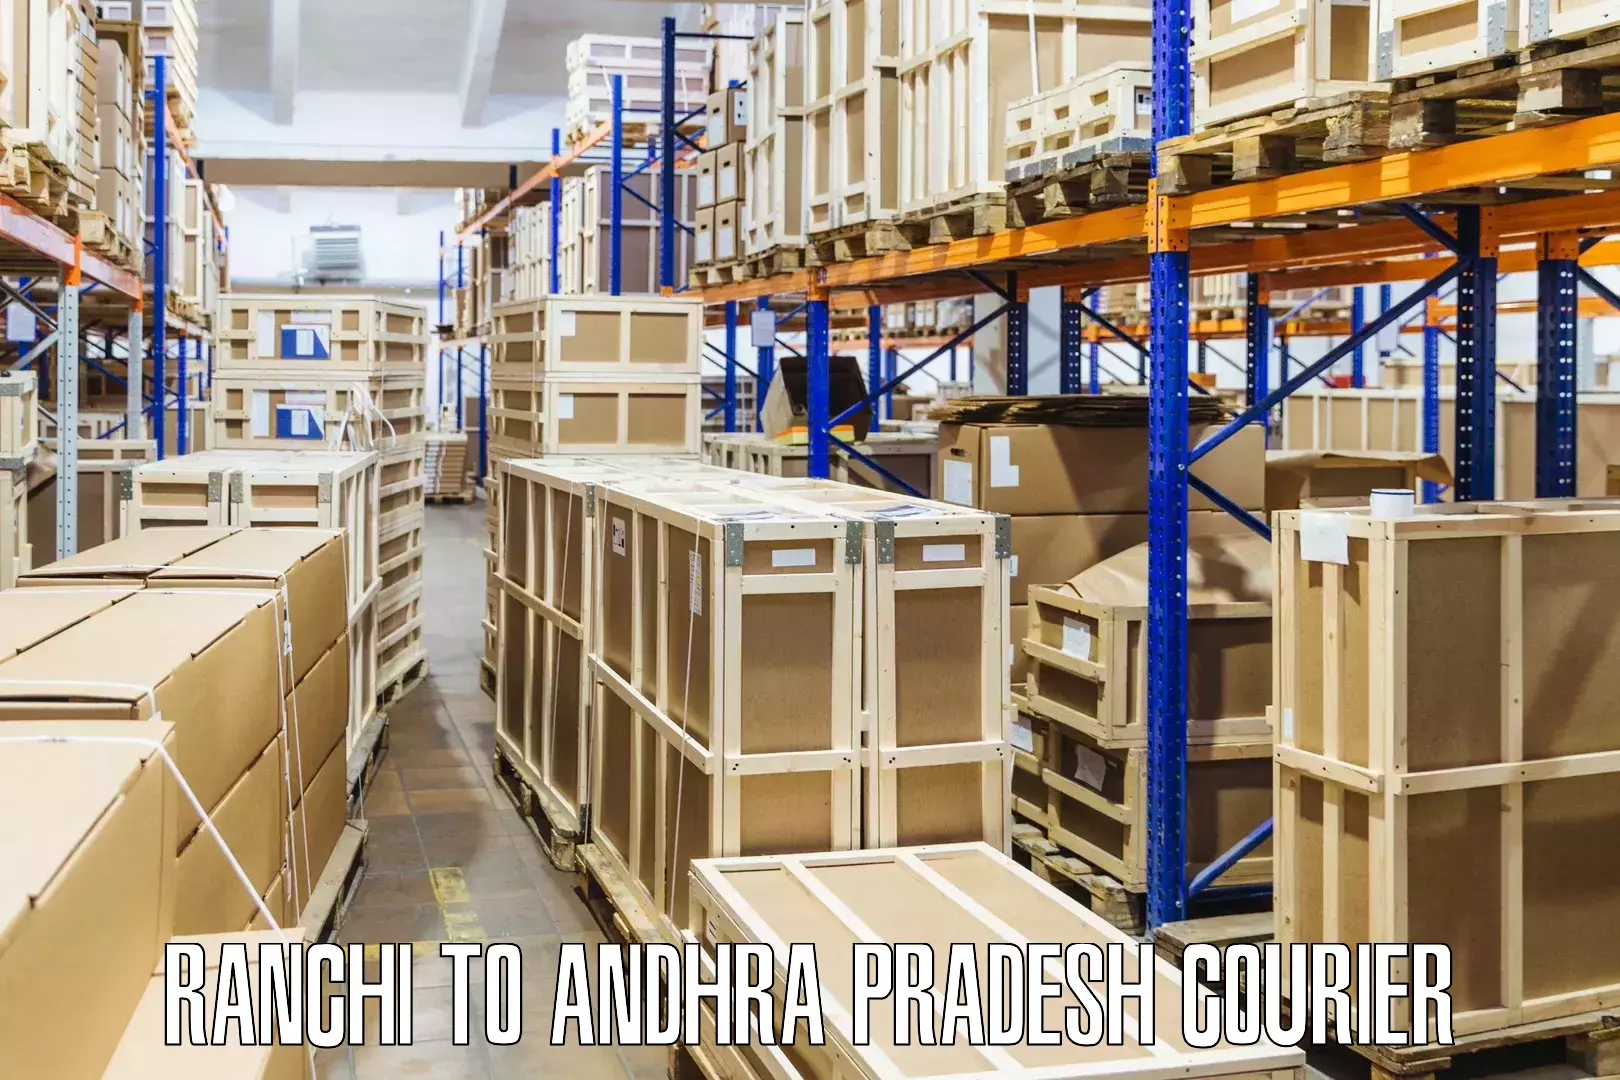 Courier service comparison Ranchi to Andhra Pradesh